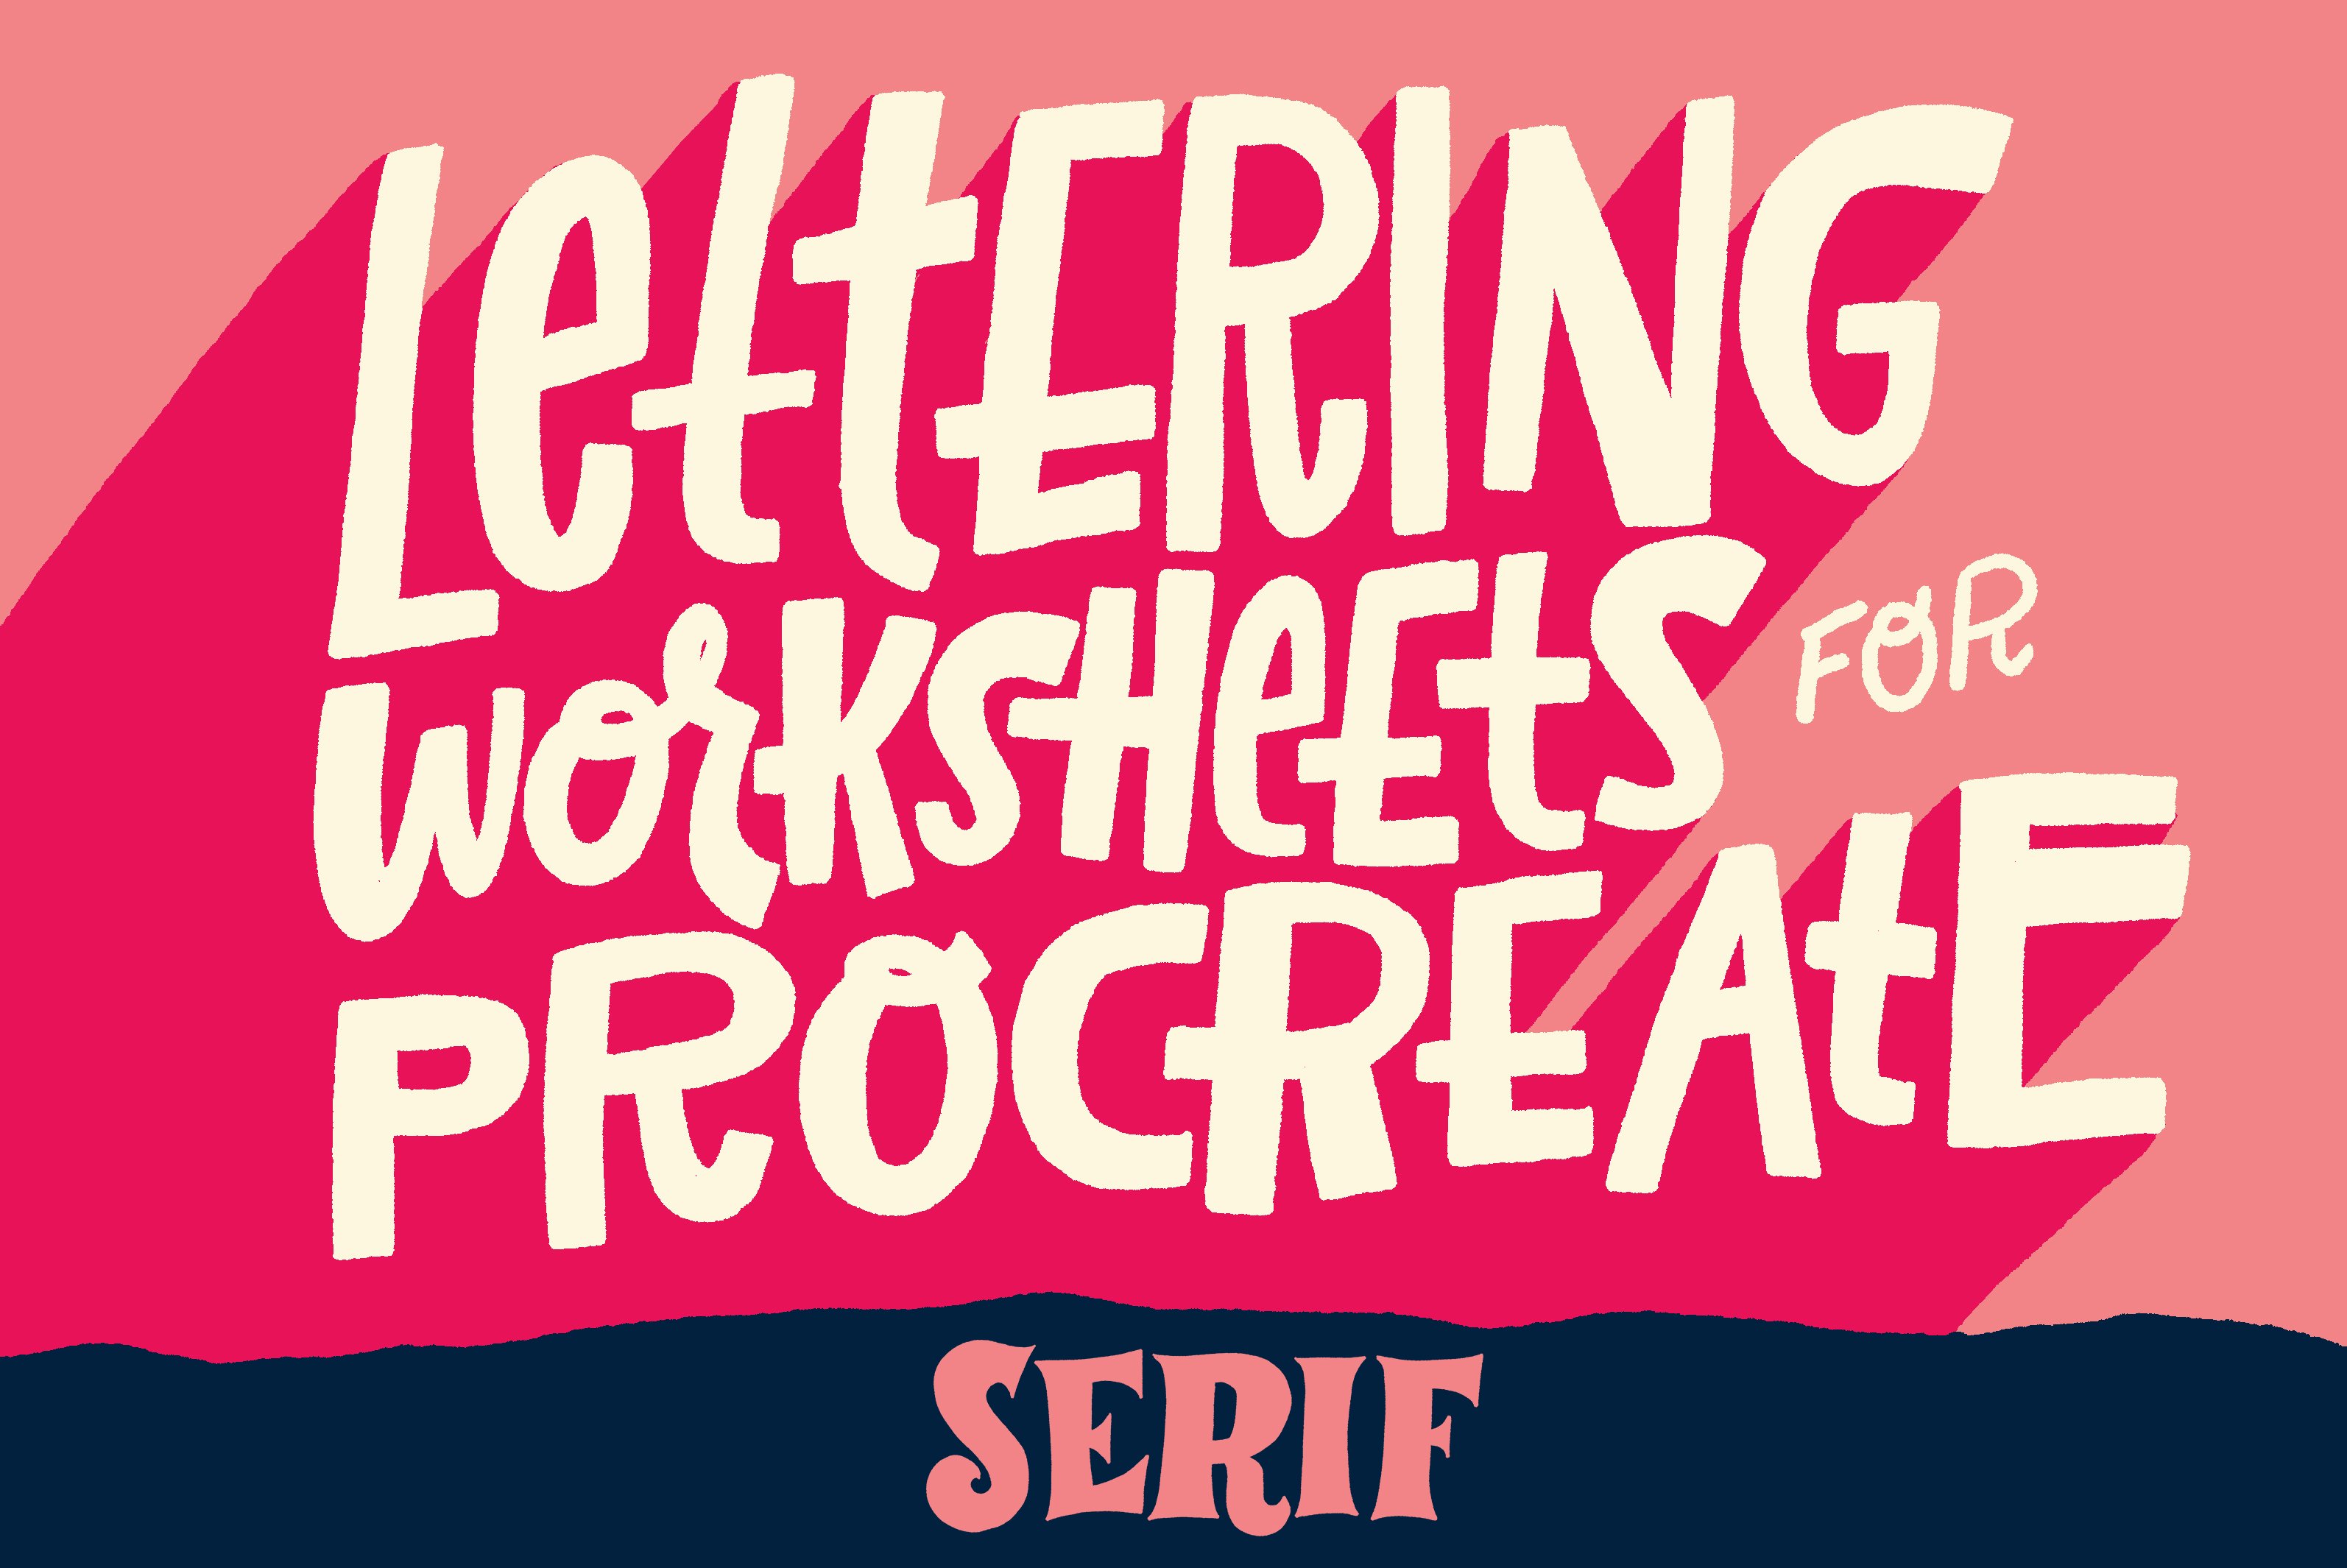 Serif Lettering Worksheetcover image.